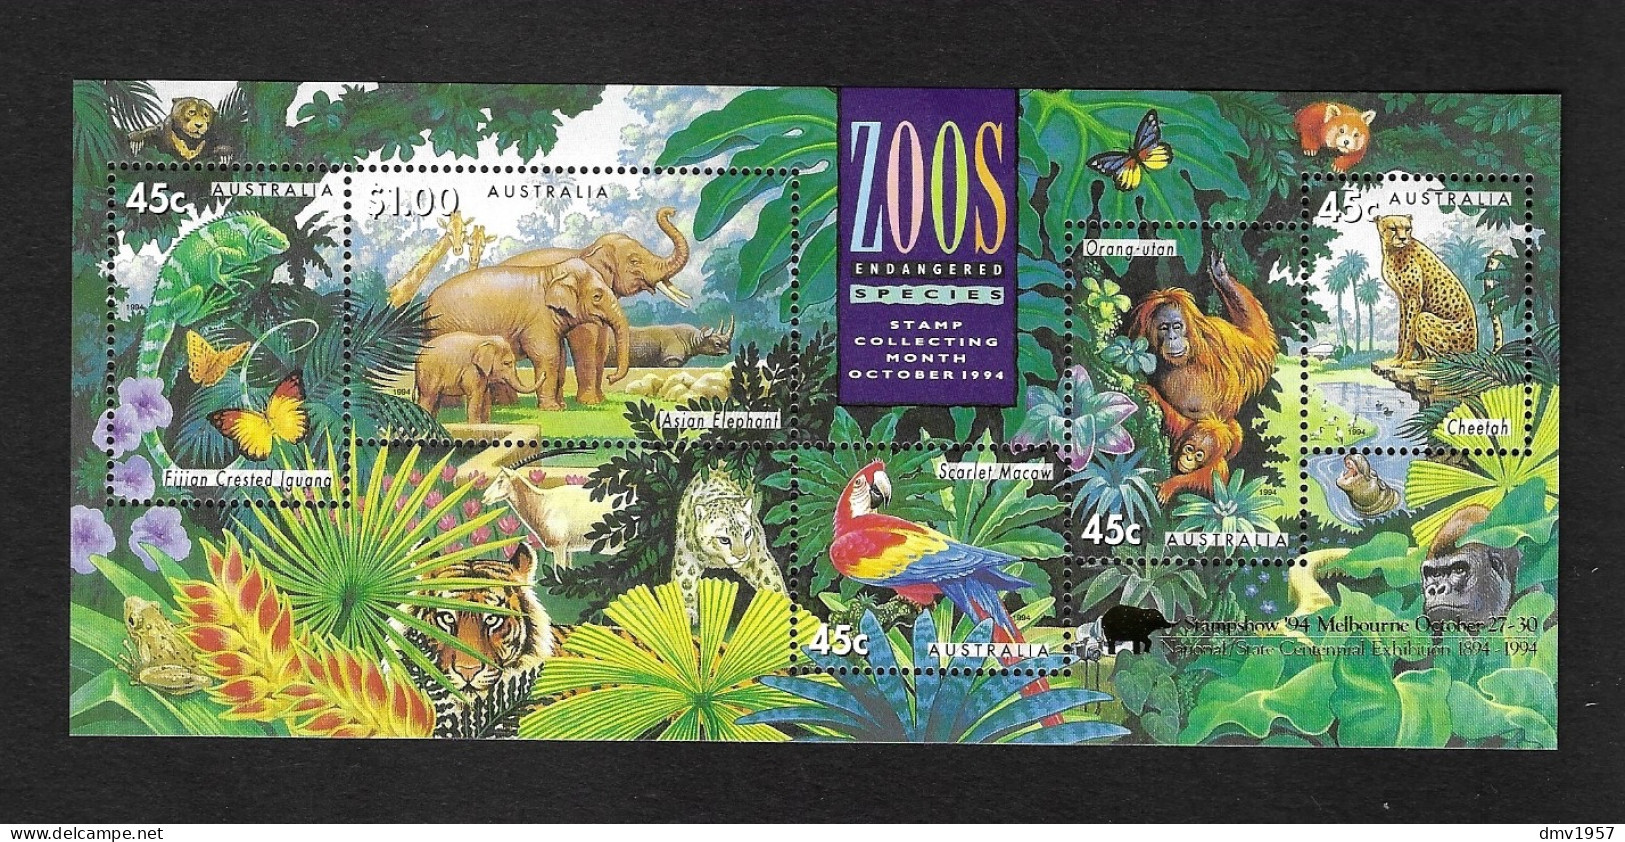 Australia 1994 MNH Australian Zoos. MS 1484 O/P Stamp Show 94 Melborne - Mint Stamps